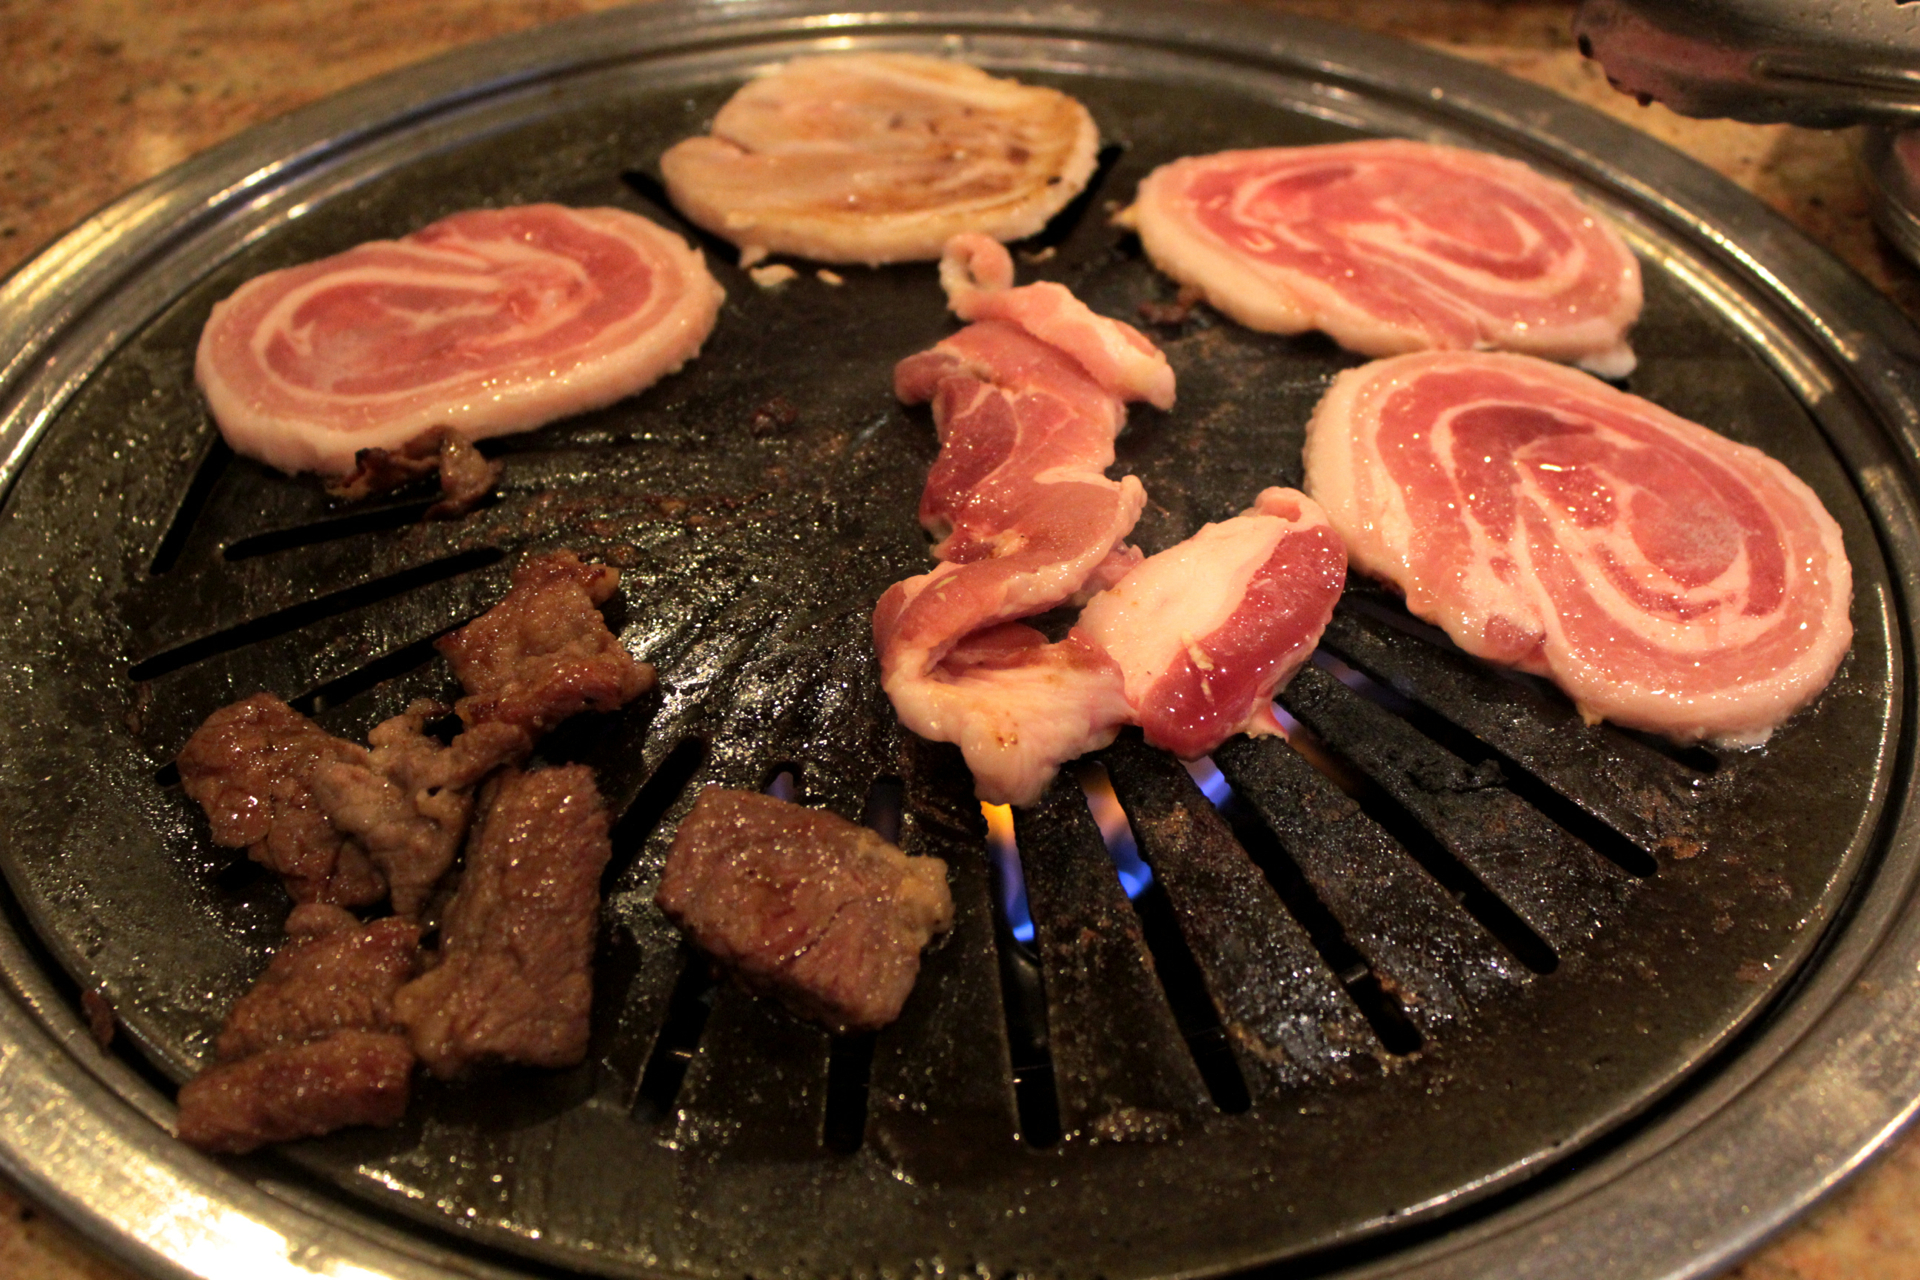 Pork belly cooking on the grill at Jang Su Jang.